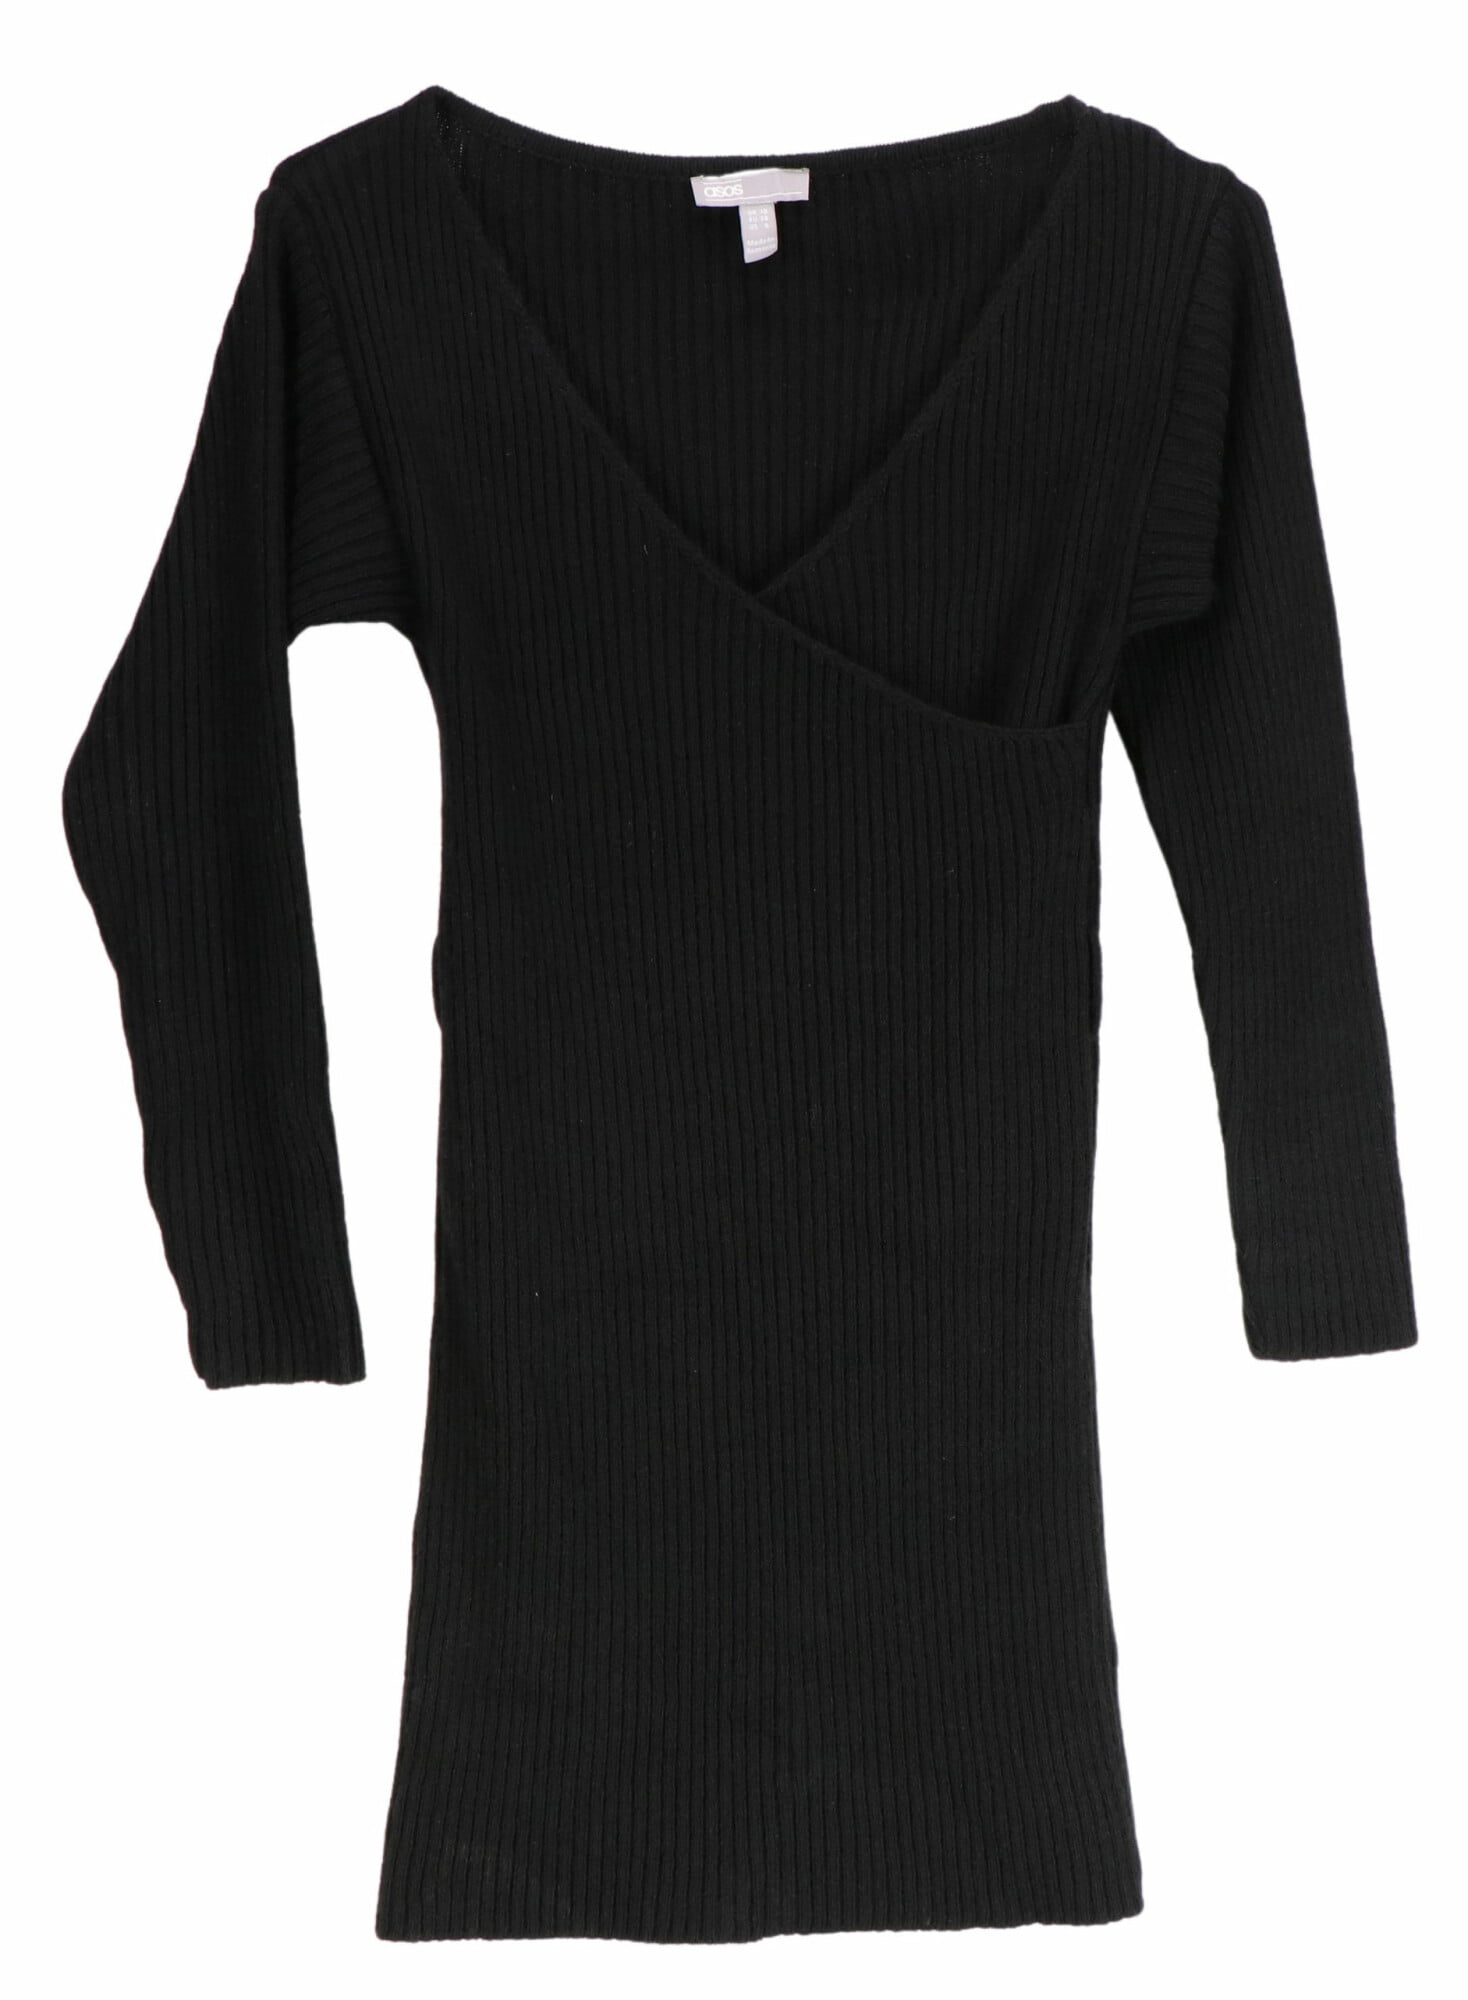 par mindre tackle asos Women's Black Vero Moda Tall Knitted Wrap Sweater Dress - 6 -  Walmart.com